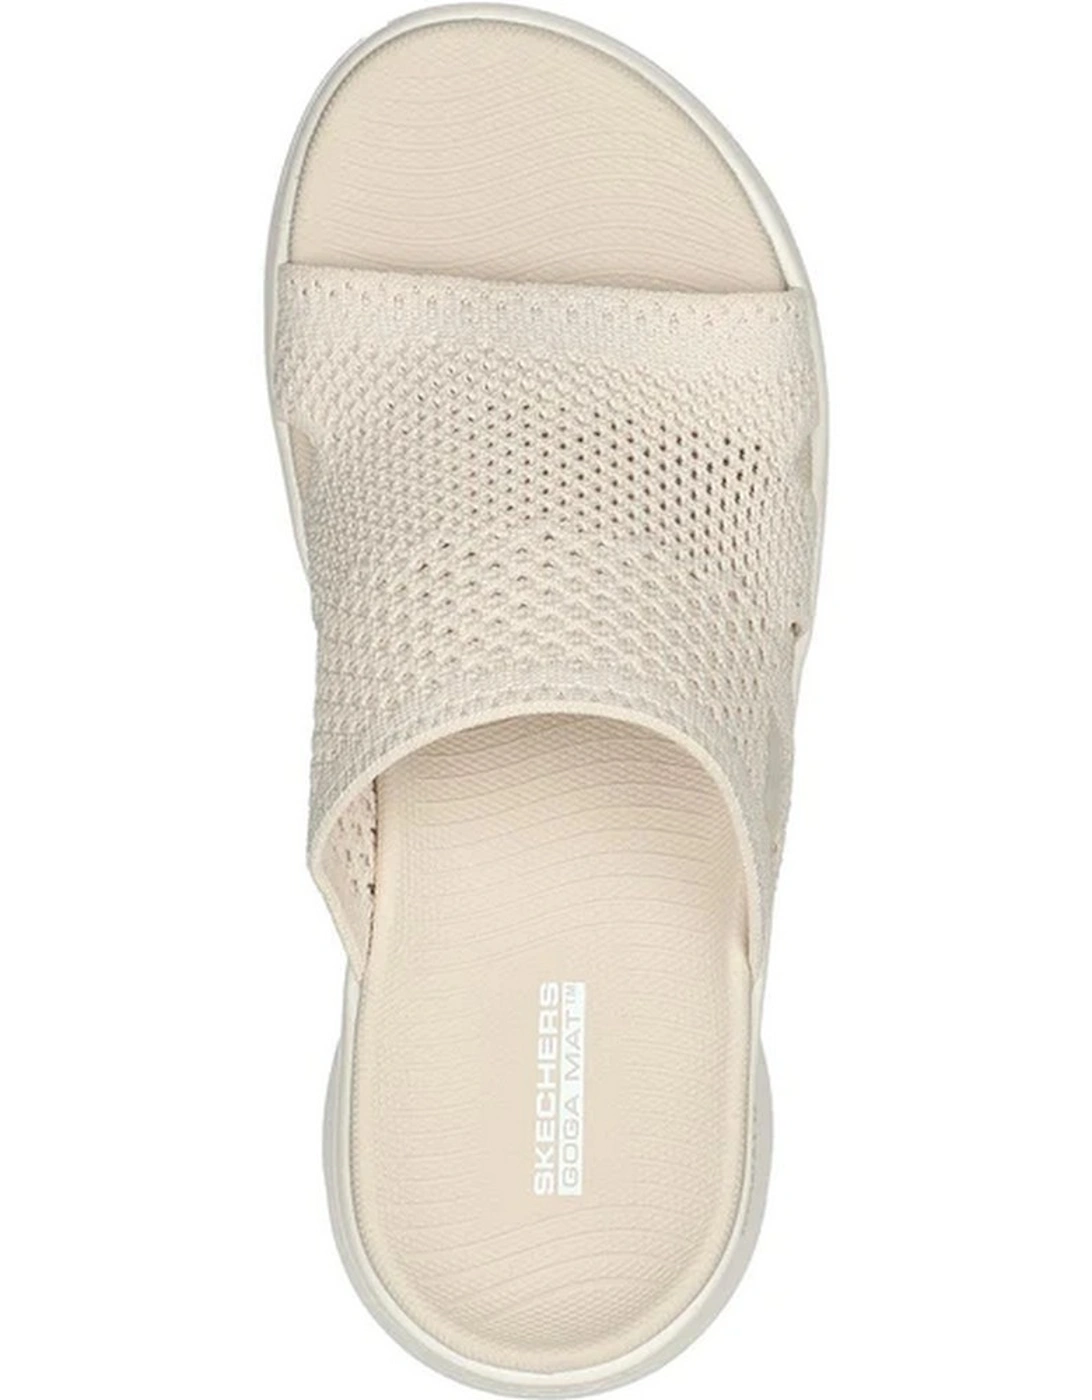 Skechers Womens/Ladies Go Walk Flex Sandals